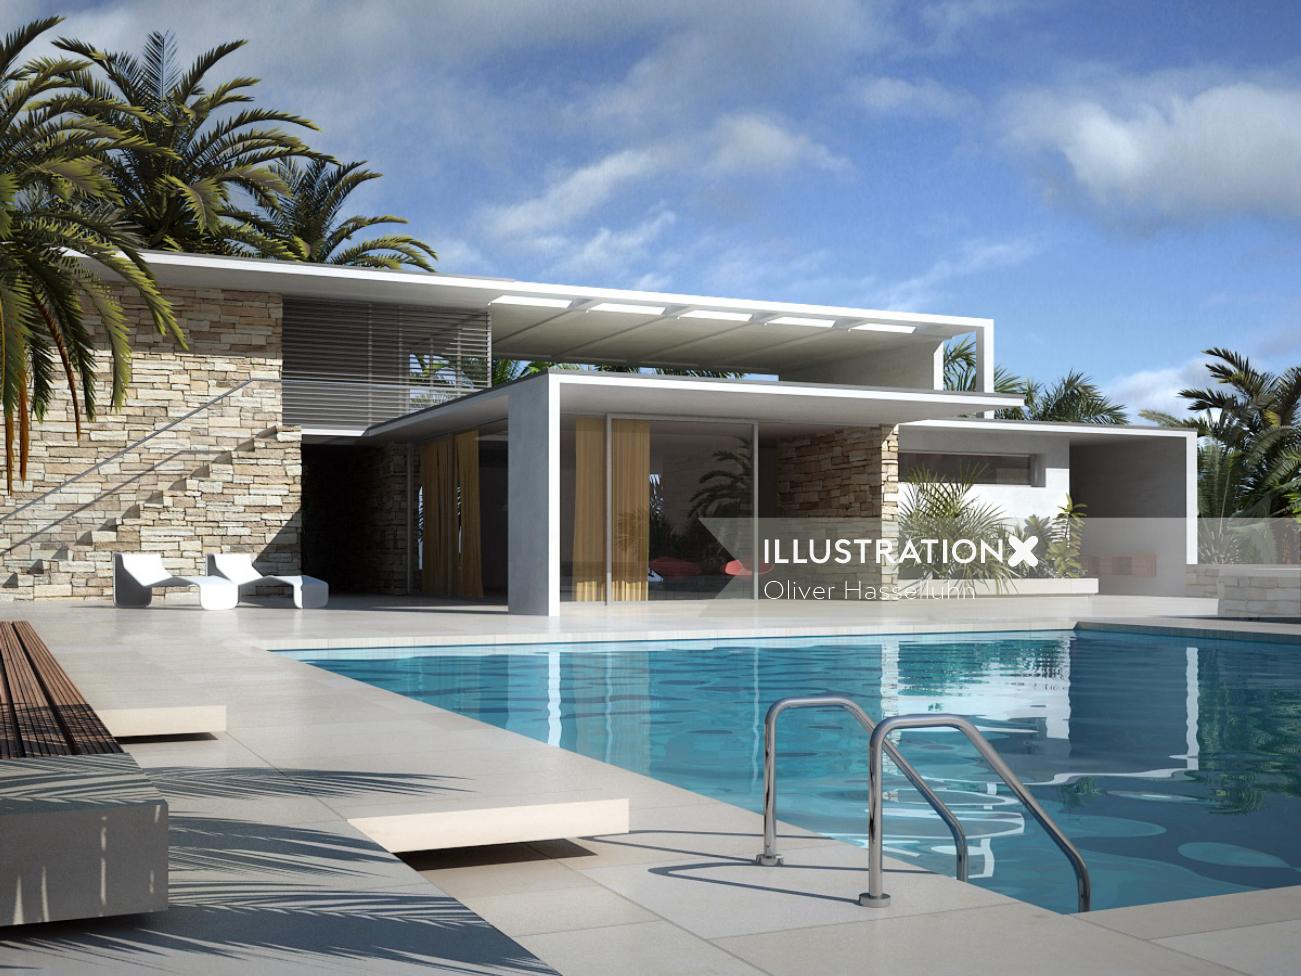 Photorealistic illustration of Haus mit Pool